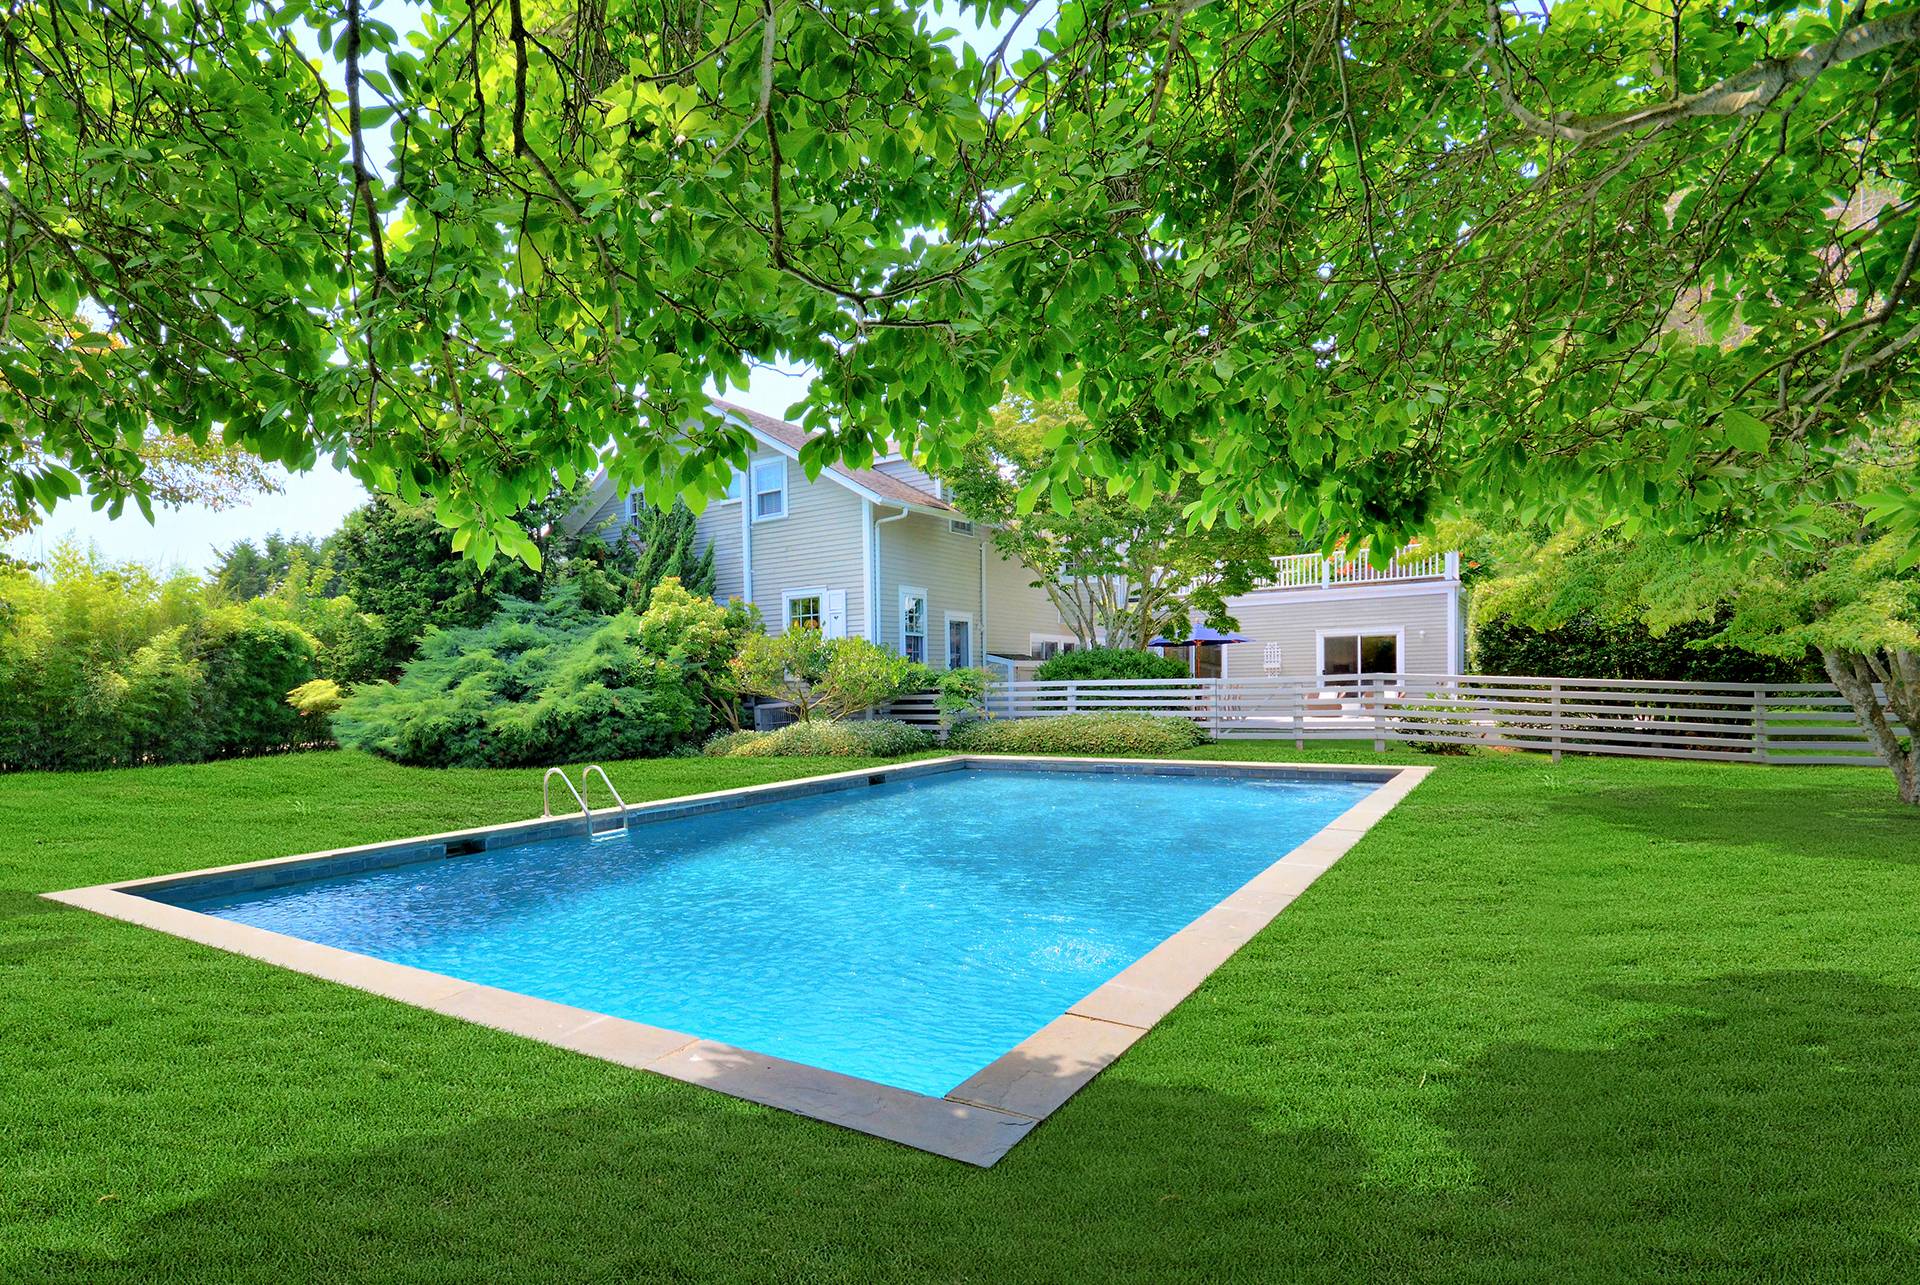 Rental Property at Village Of Southampton, Village Of Southampton, Hamptons, NY - Bedrooms: 5 
Bathrooms: 5.5  - $200,000 MO.